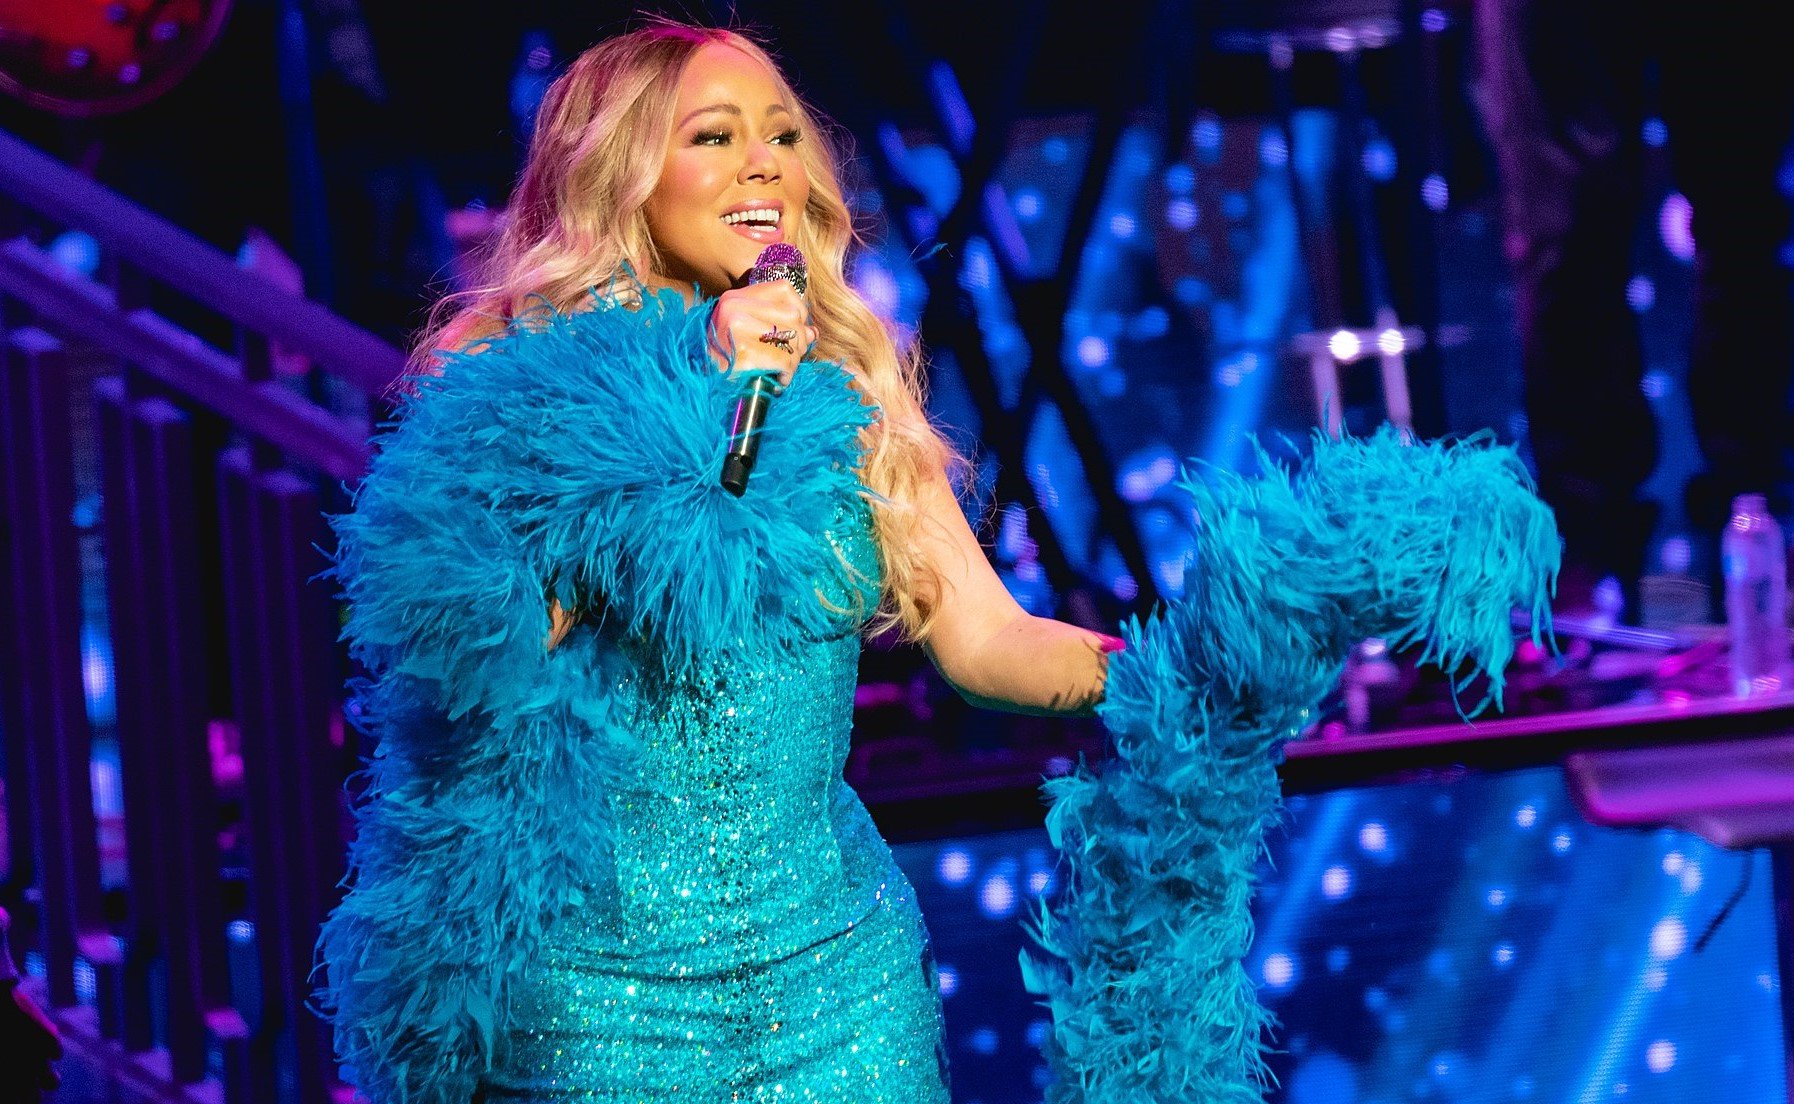 Mariah Carey performing at a concert wearing a blue dress